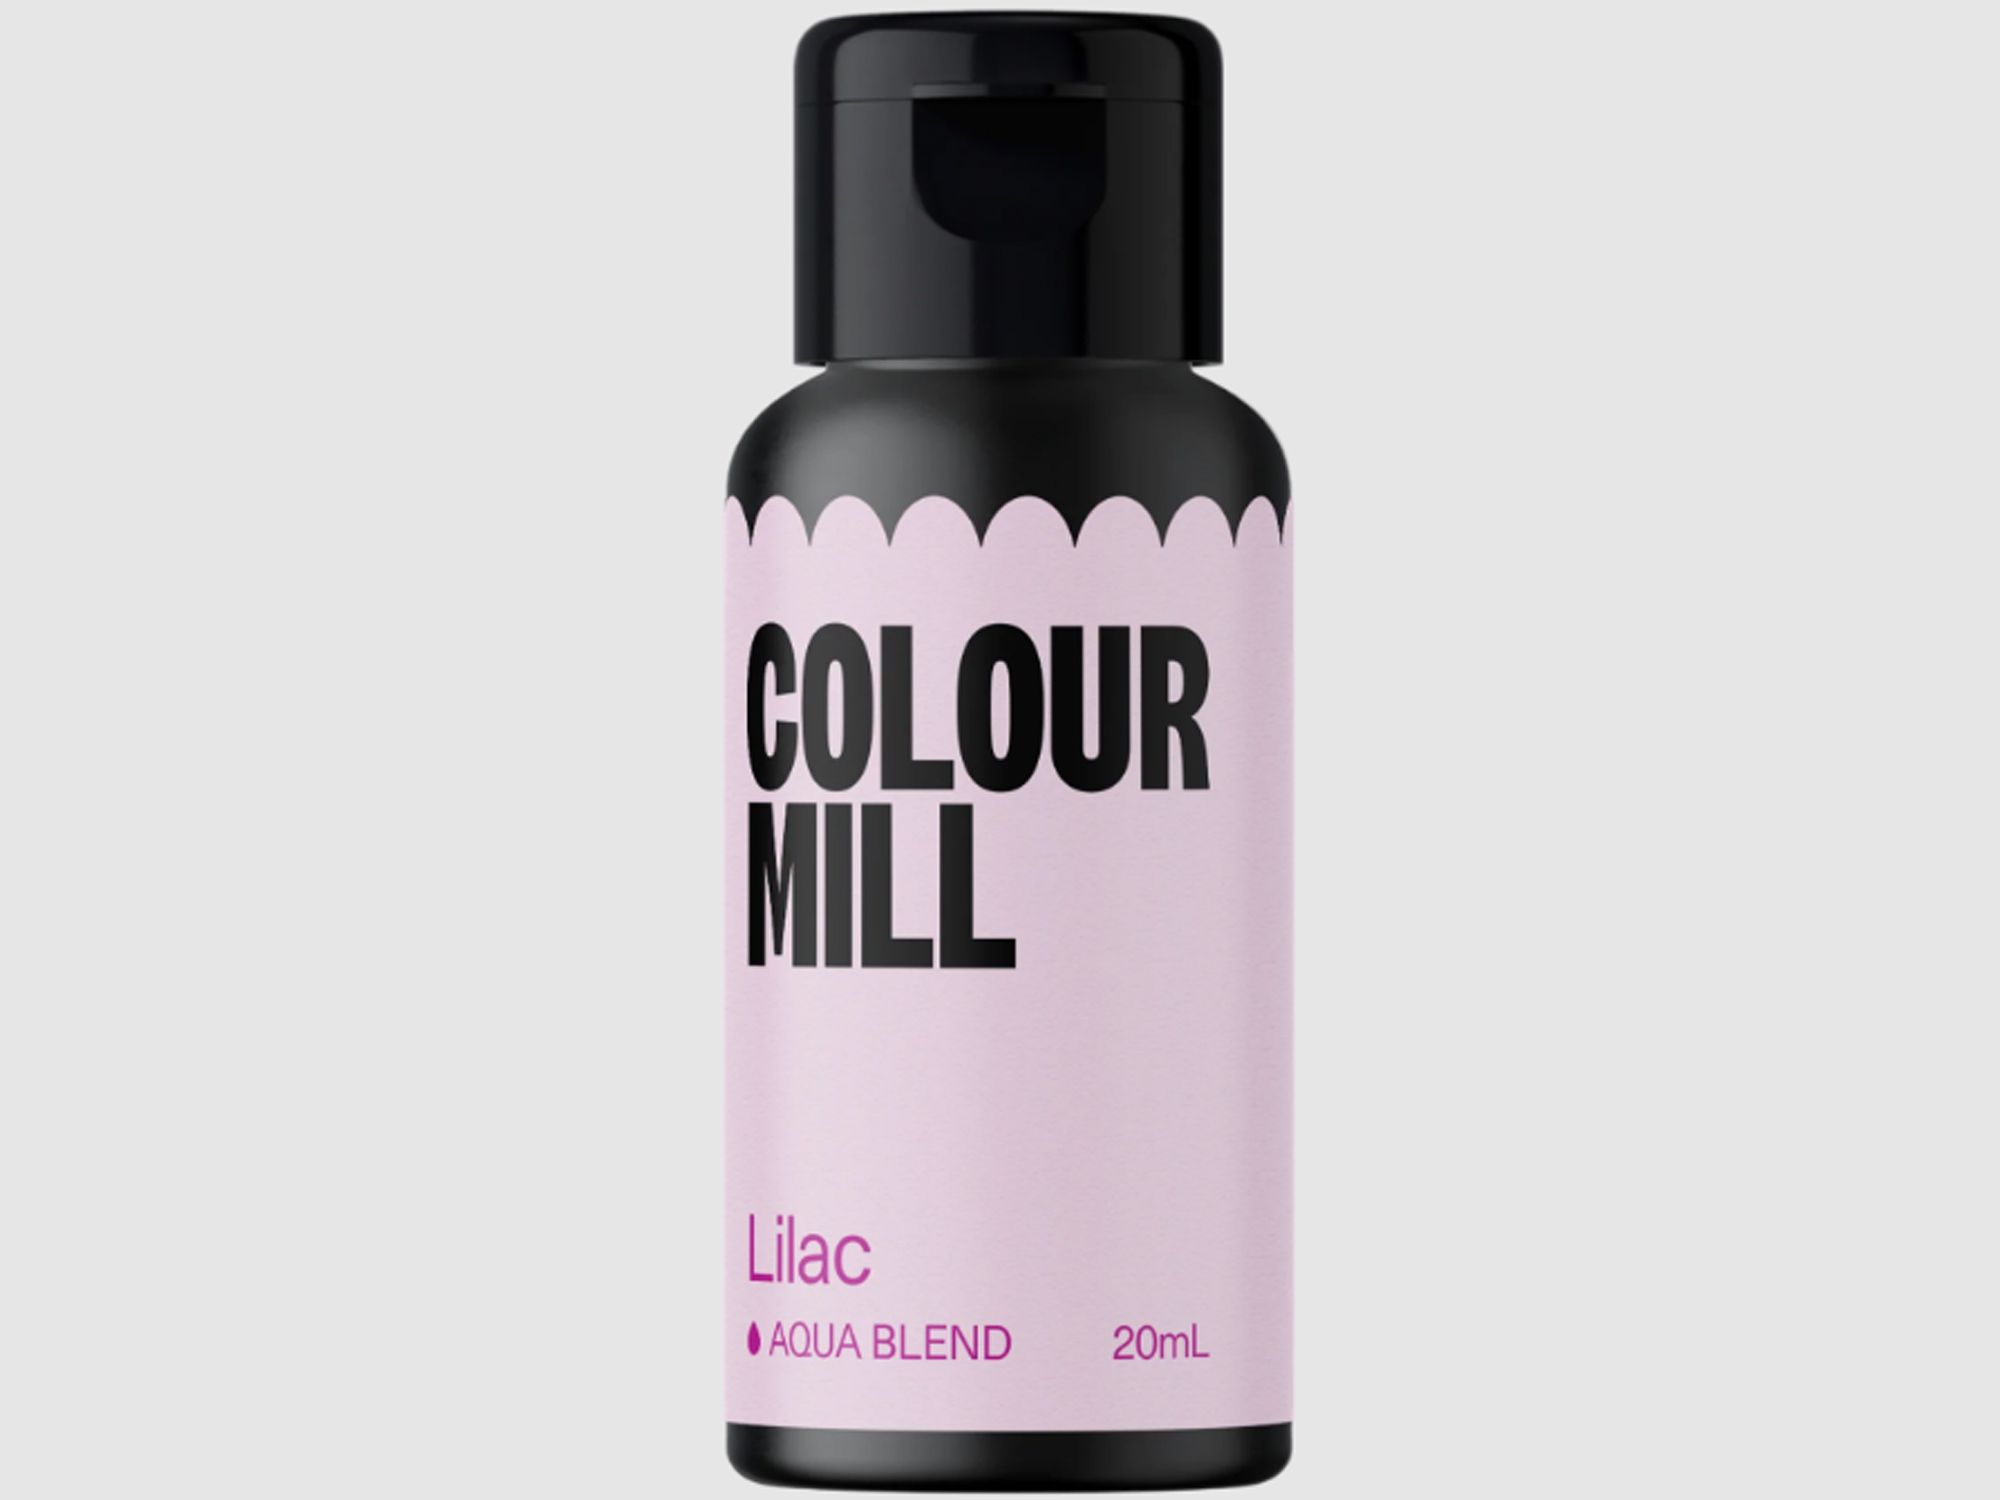 Colour Mill Lilac (Aqua Blend) 20ml